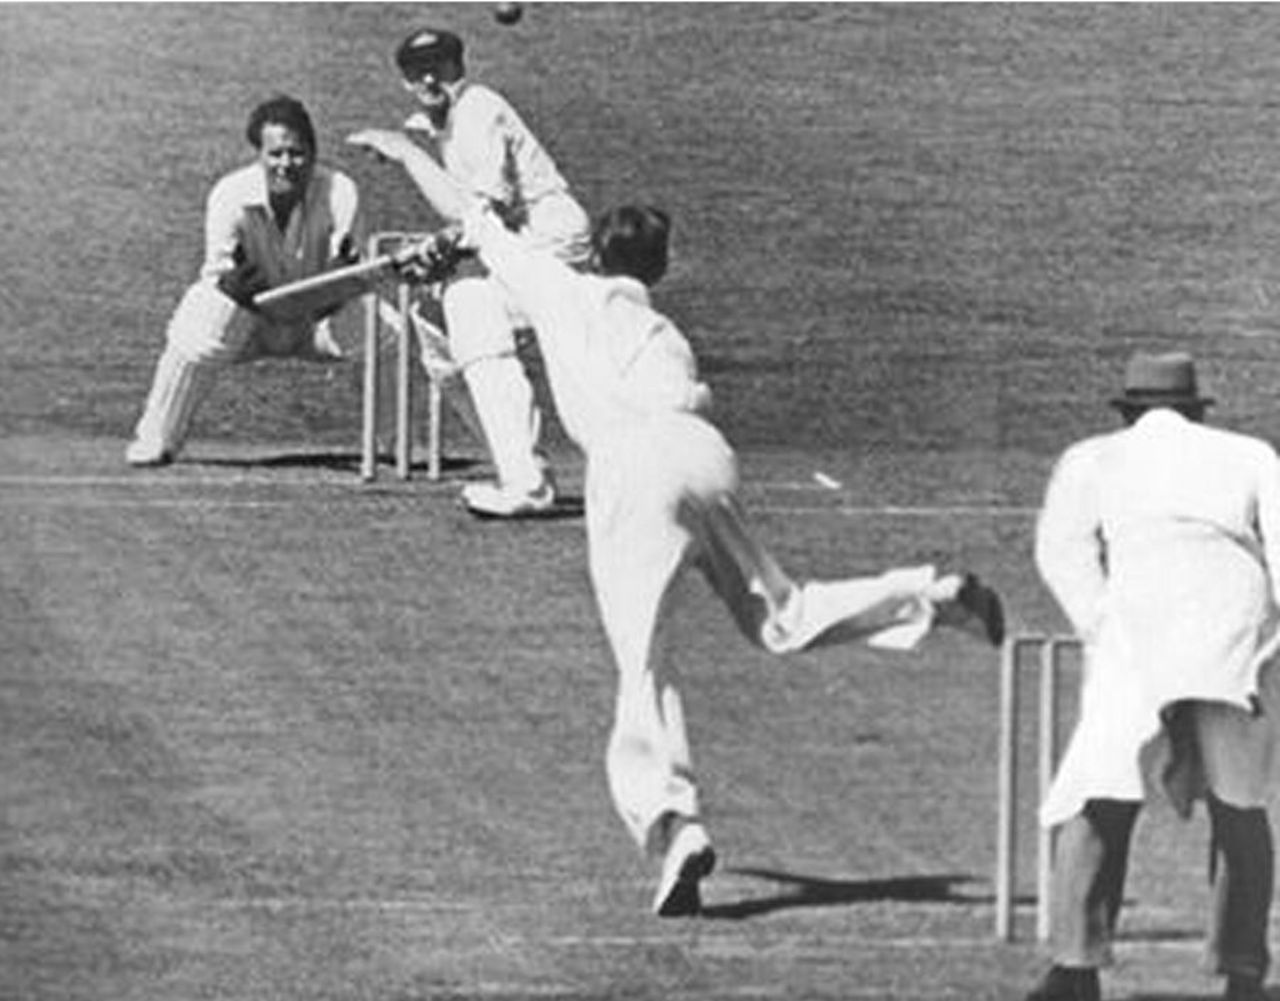 Peter Smith bowls to Don Bradman - Bradman made 187 as the Australians scored 721, Essex v Australians, Southend, May 15, 1948